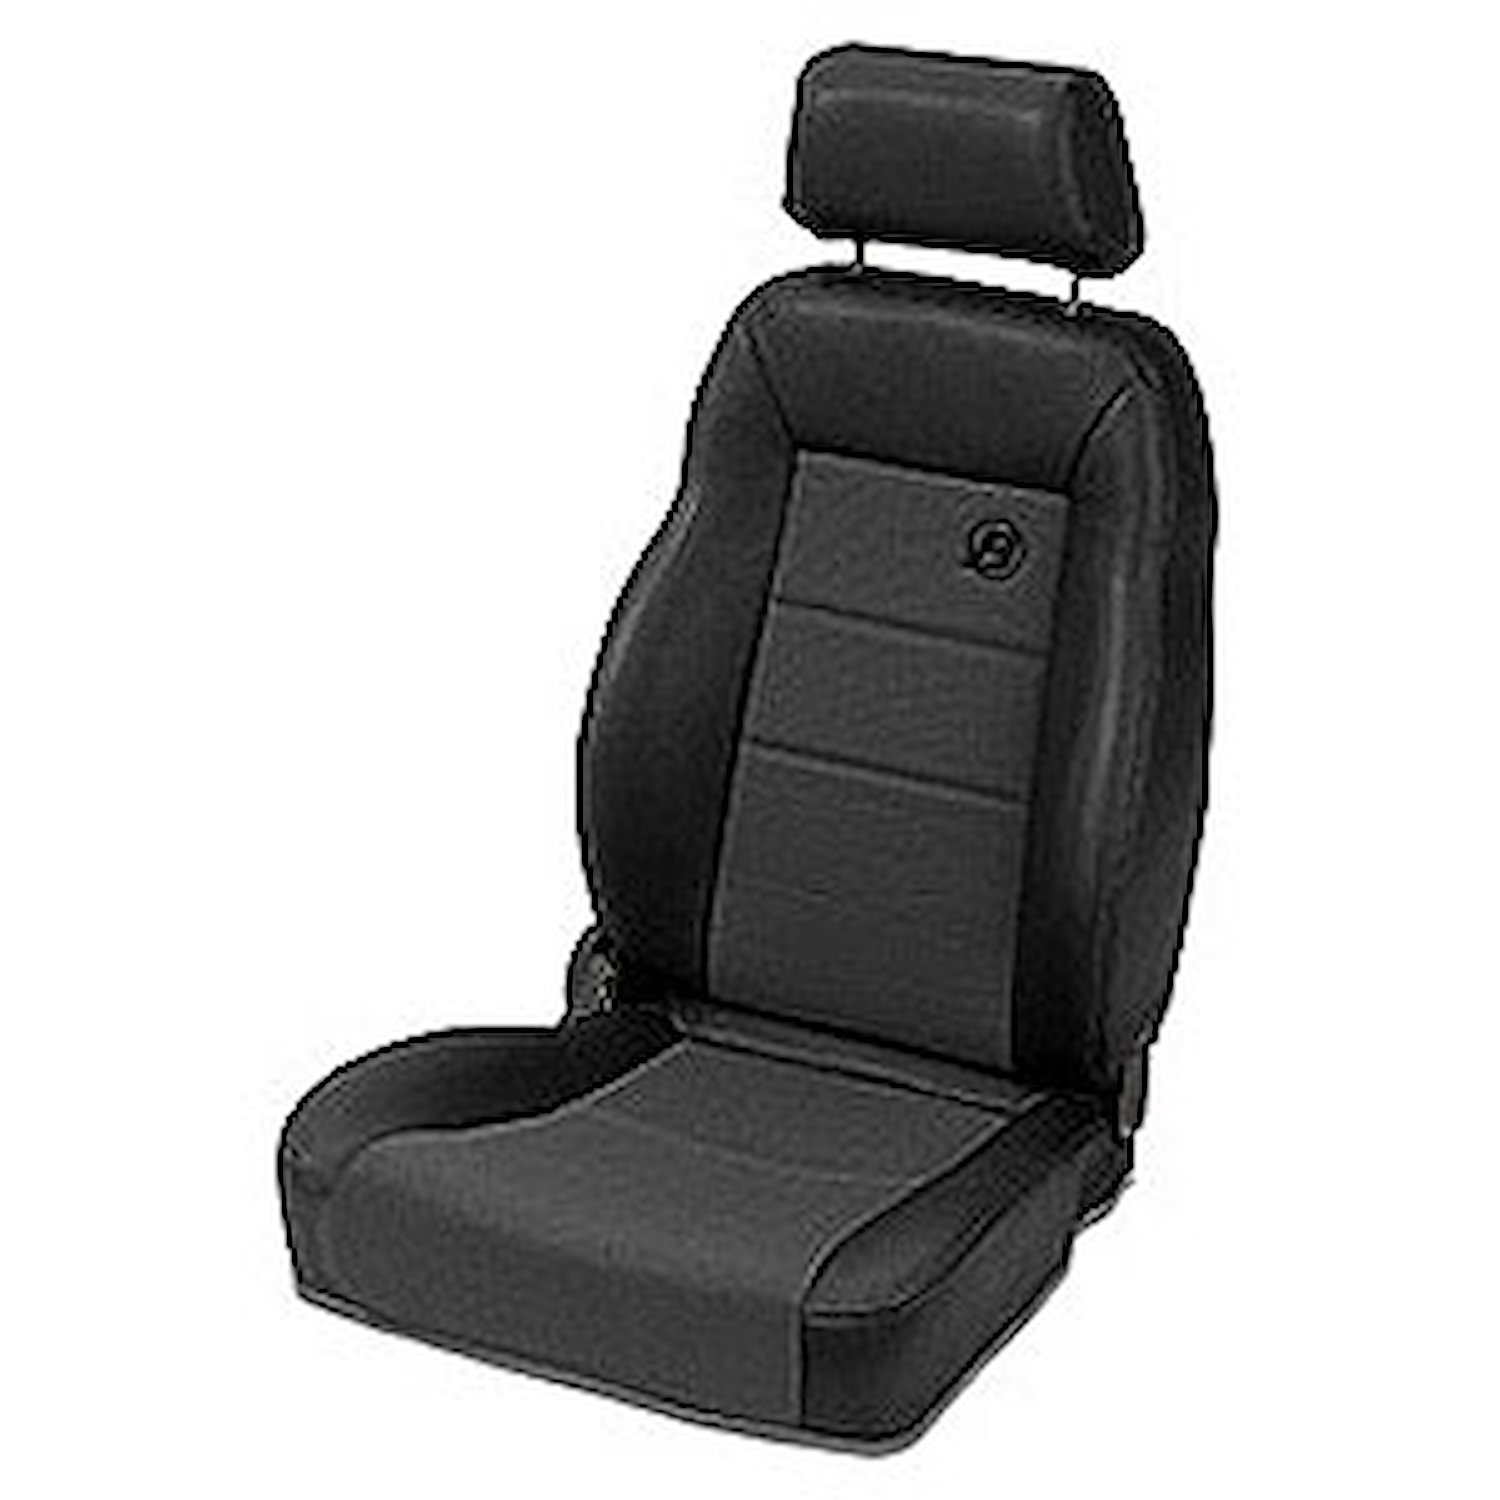 Trailmax II Pro Seat, Black Denim, Front, High-Back, Vinyl, w/Center Fabric Insert, Premium Bucket, Passenger Side,